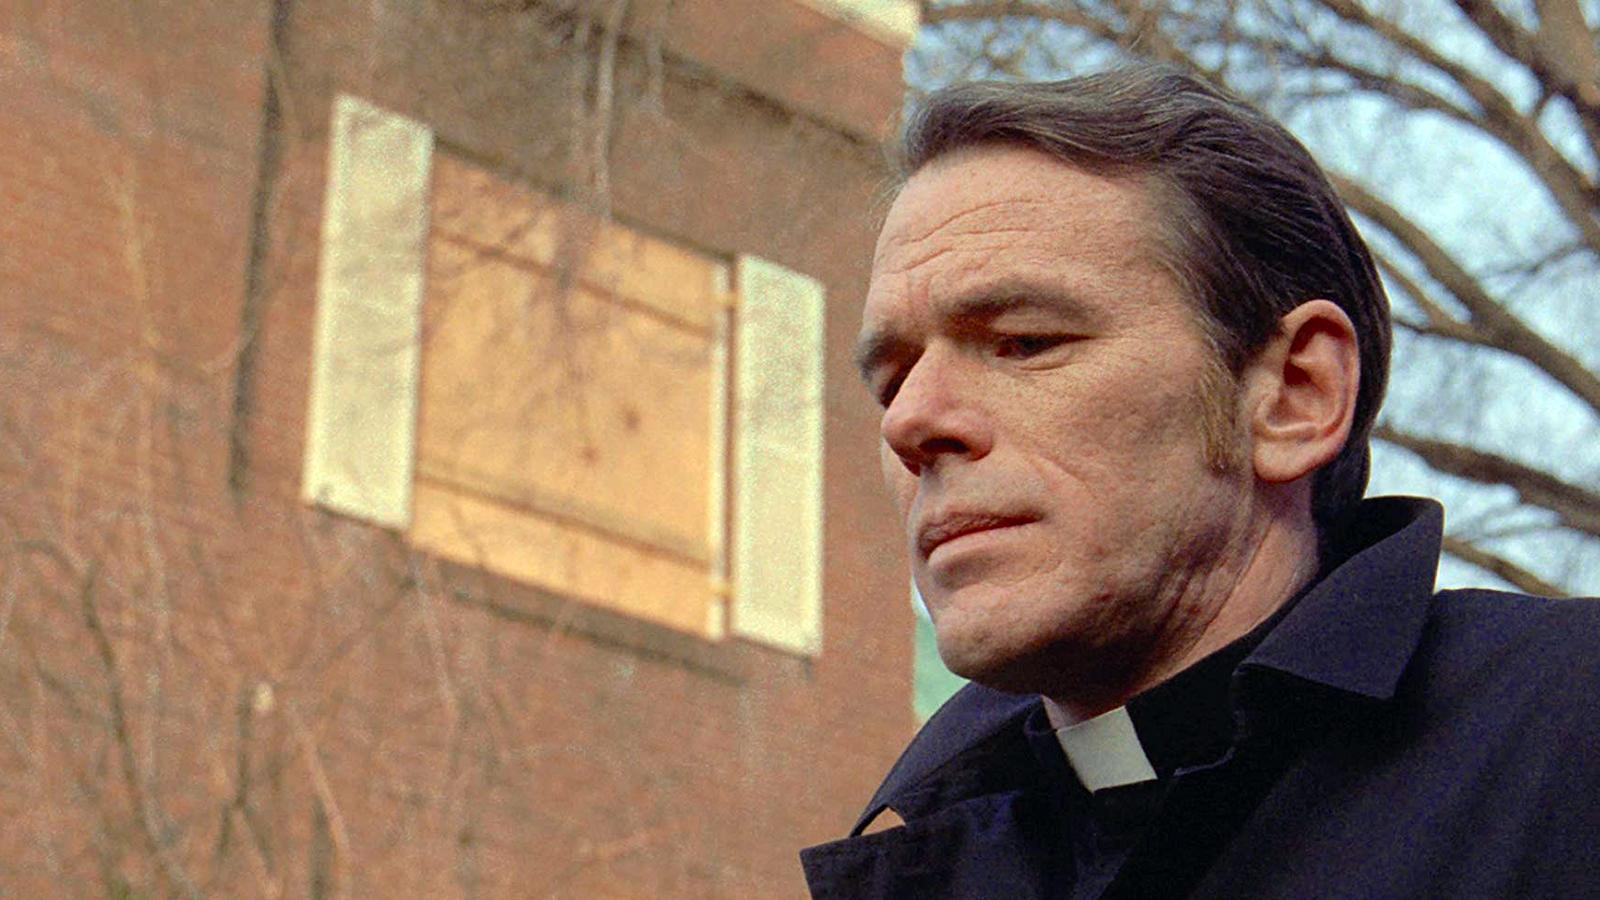 William O’Malley som Father Dyer i skräckfilmen ”Exorcisten”.